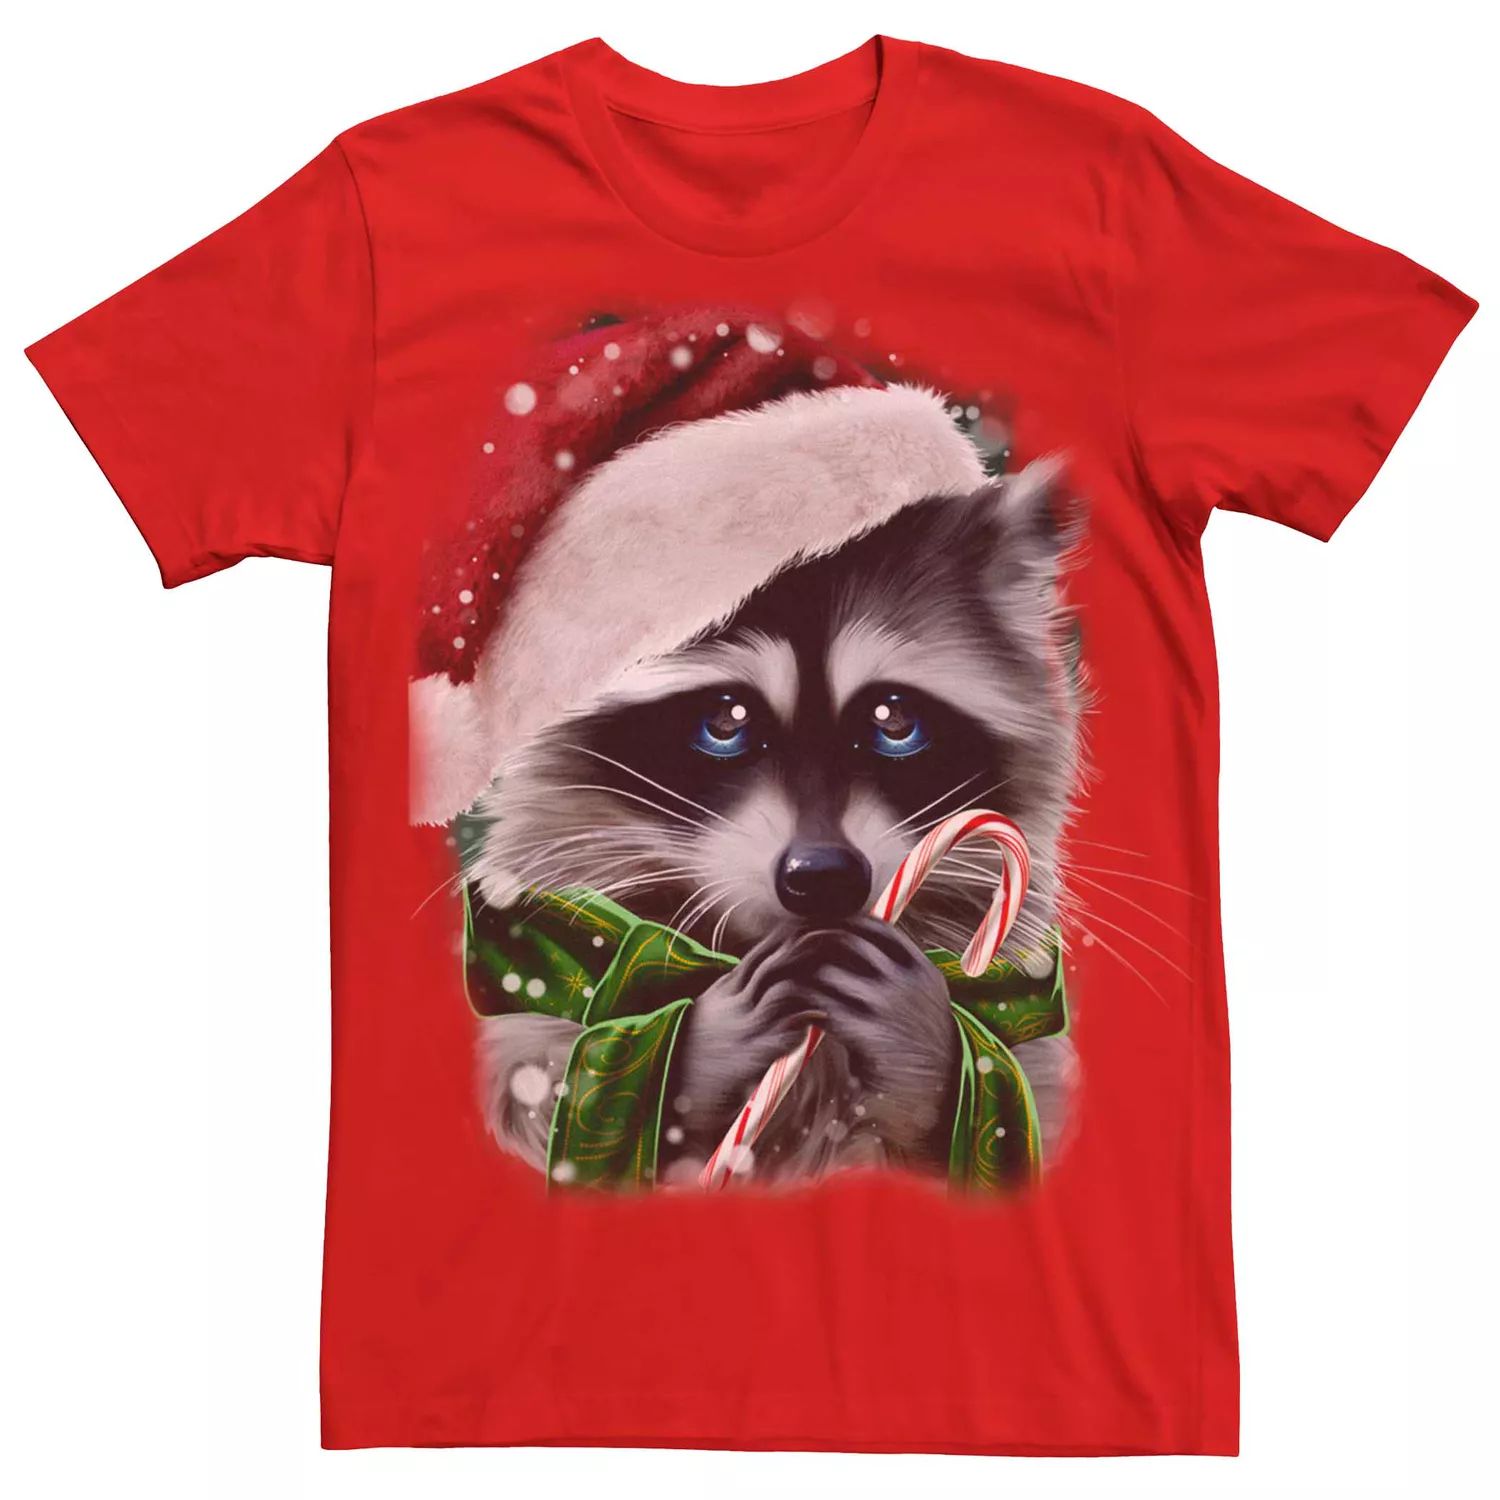 Мужская футболка с рождественским рисунком енота Sad Eyes Licensed Character